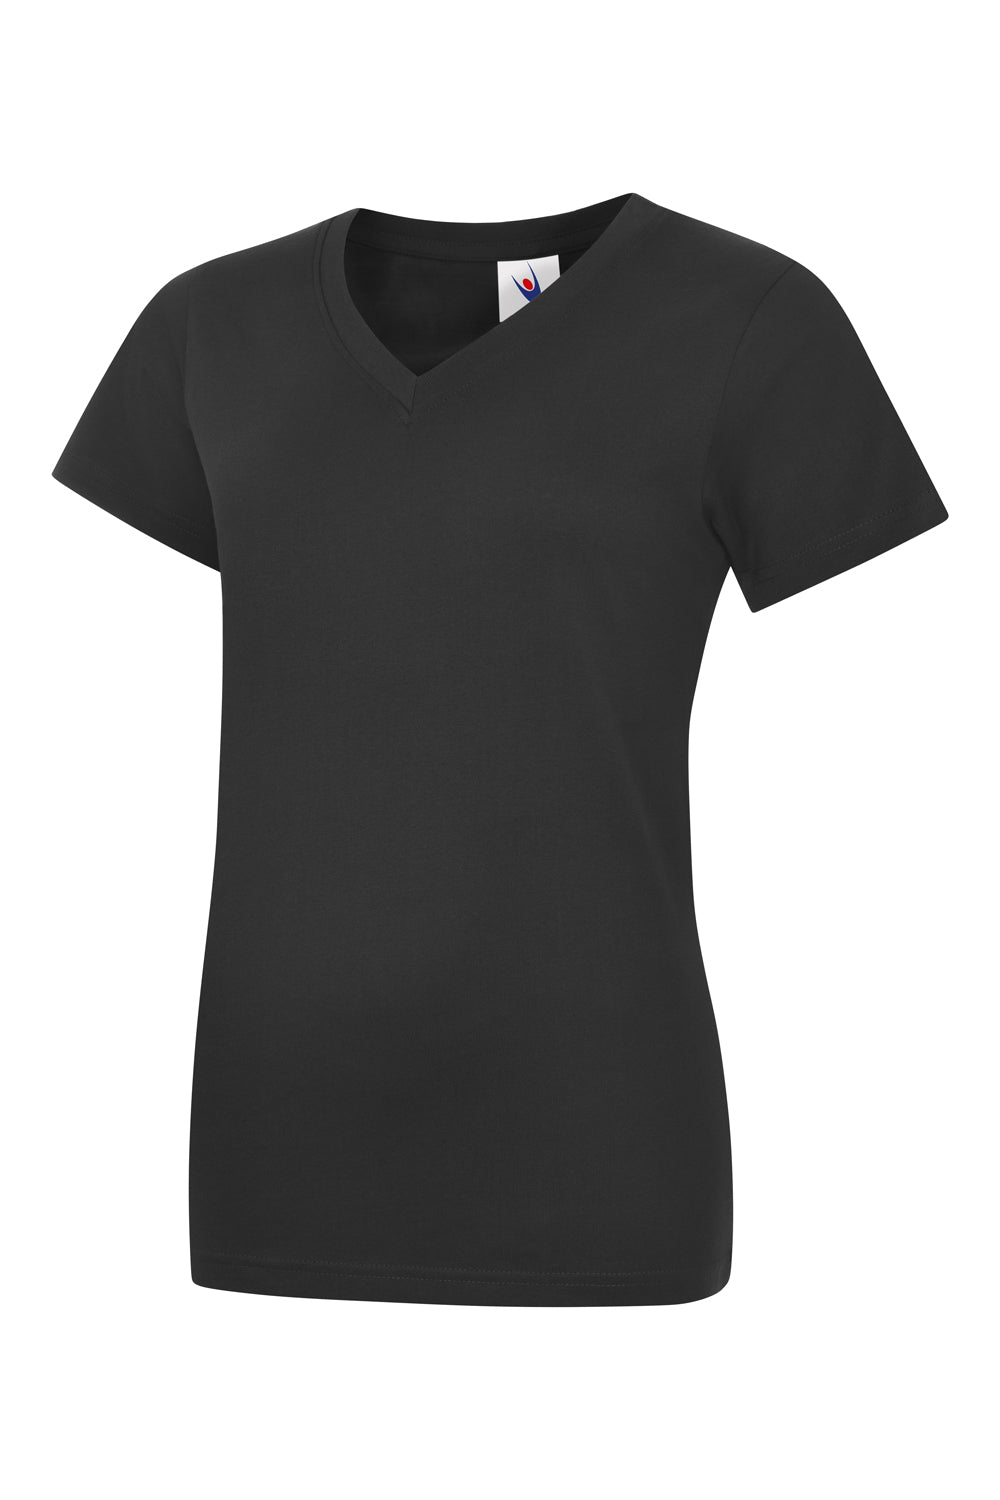 Uneek Ladies Classic V Neck T Shirt UC319 - Black